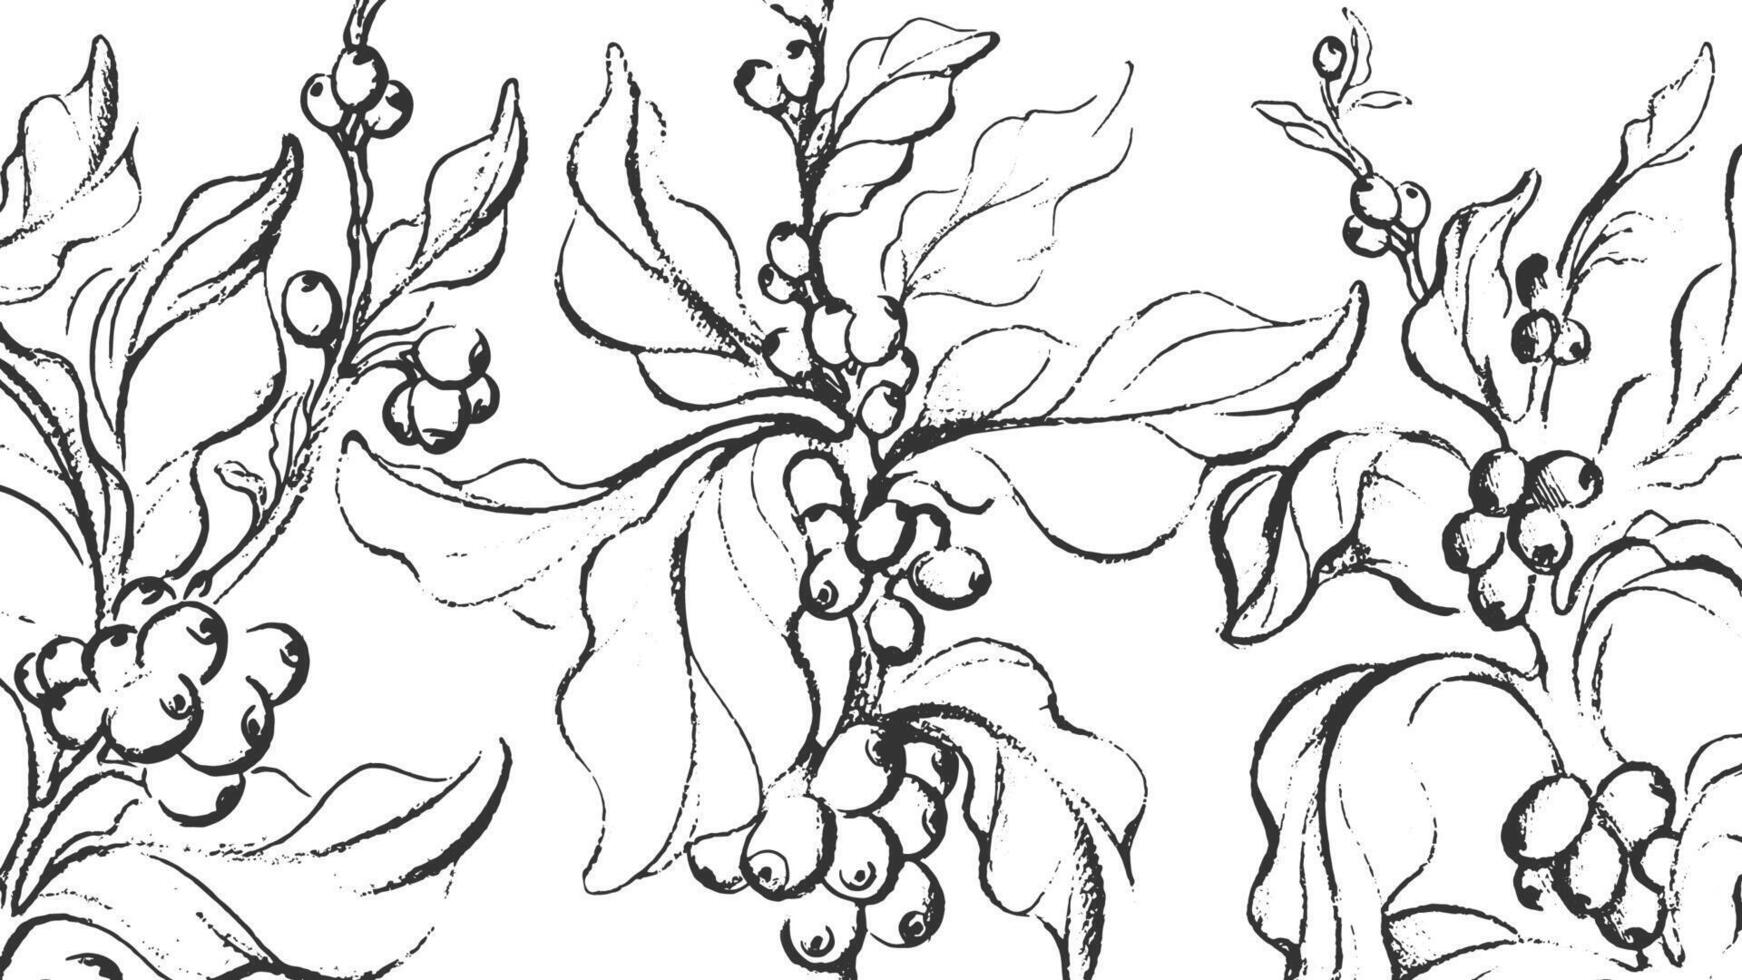 café bosquejo. vector naturaleza árbol, rama, hoja, frijol, grano. Clásico mano dibujado tinta ilustración en blanco antecedentes. aroma energía beber. tropical alimento, granja plantación